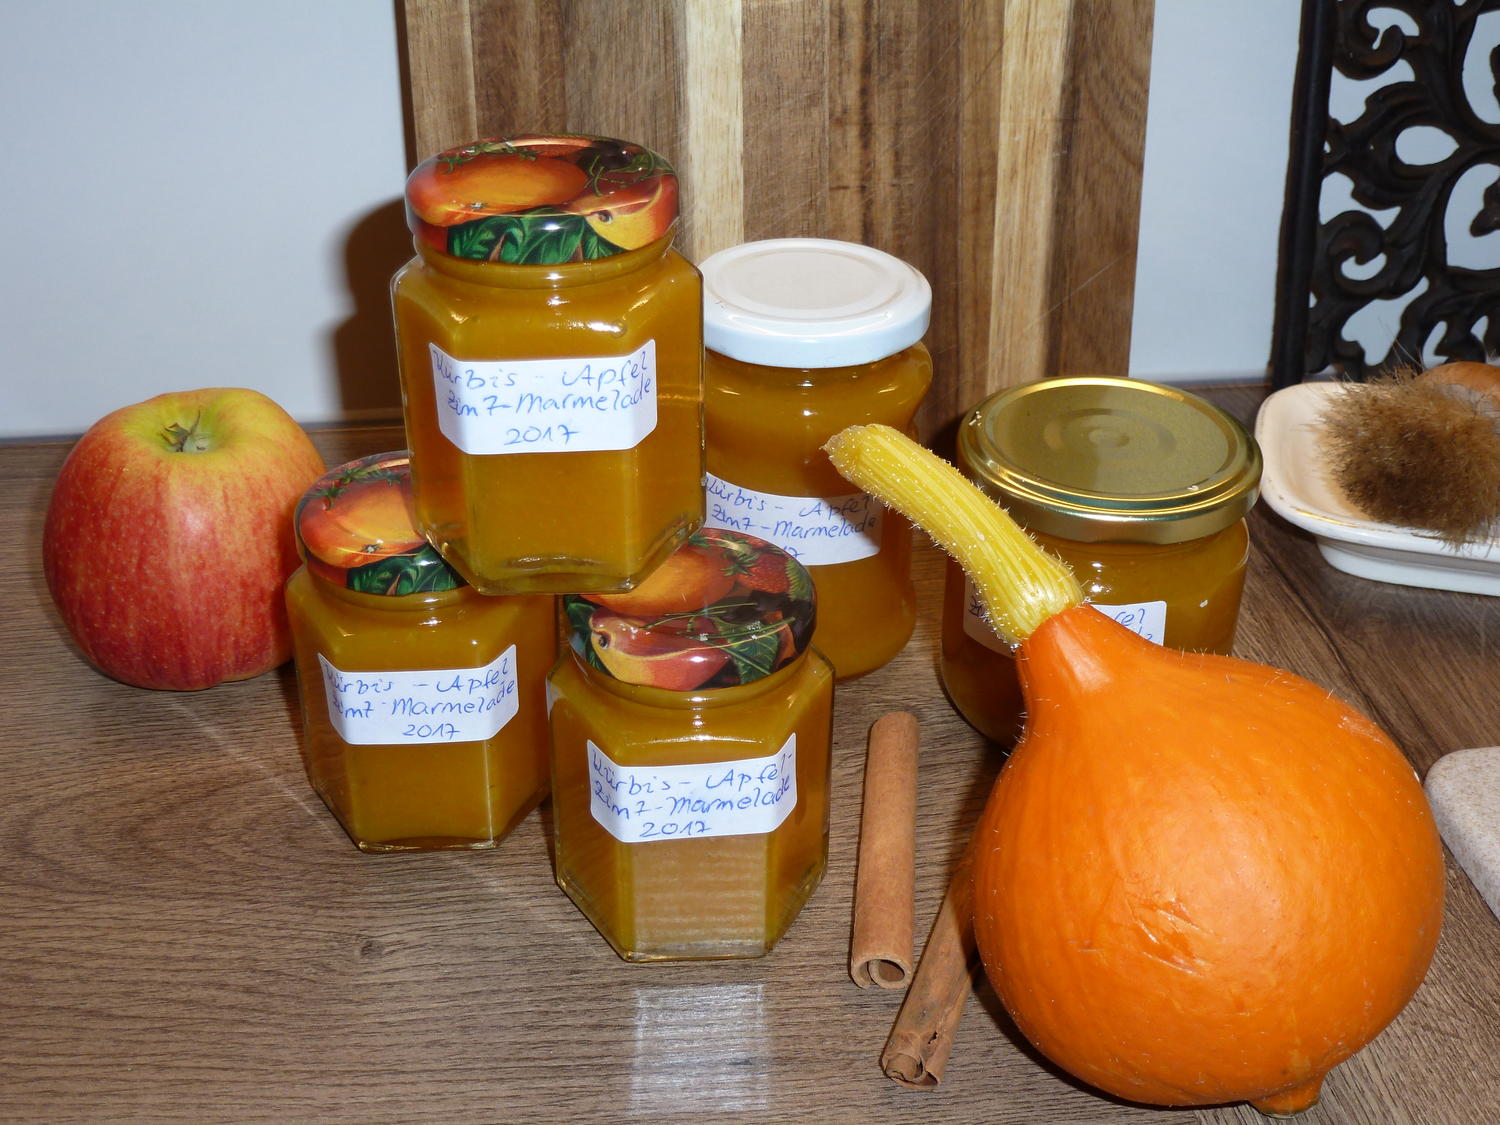 Apfel Felsenbirnen Marmelade — Rezepte Suchen